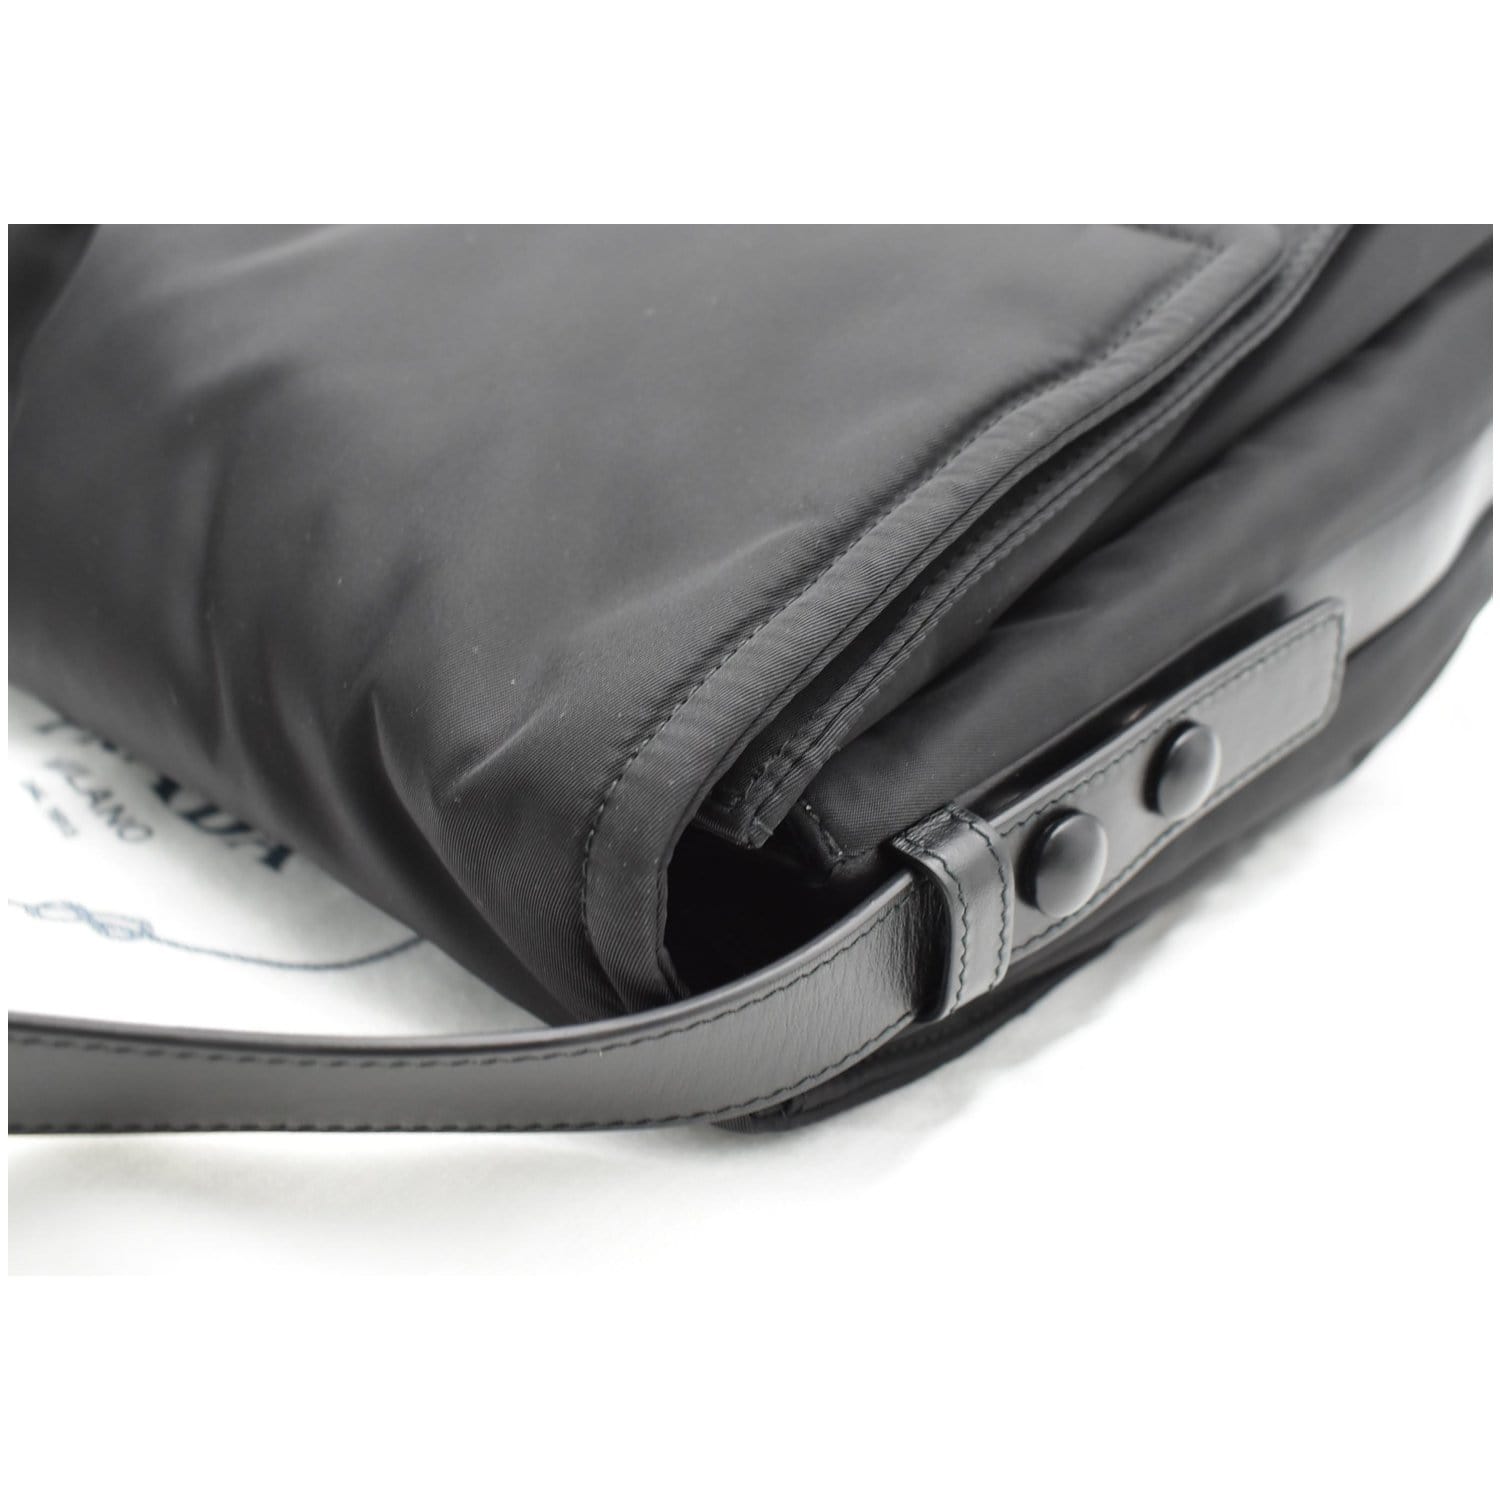 Prada Padded Re-Nylon Flap Small Shoulder Bag, Prada Handbags